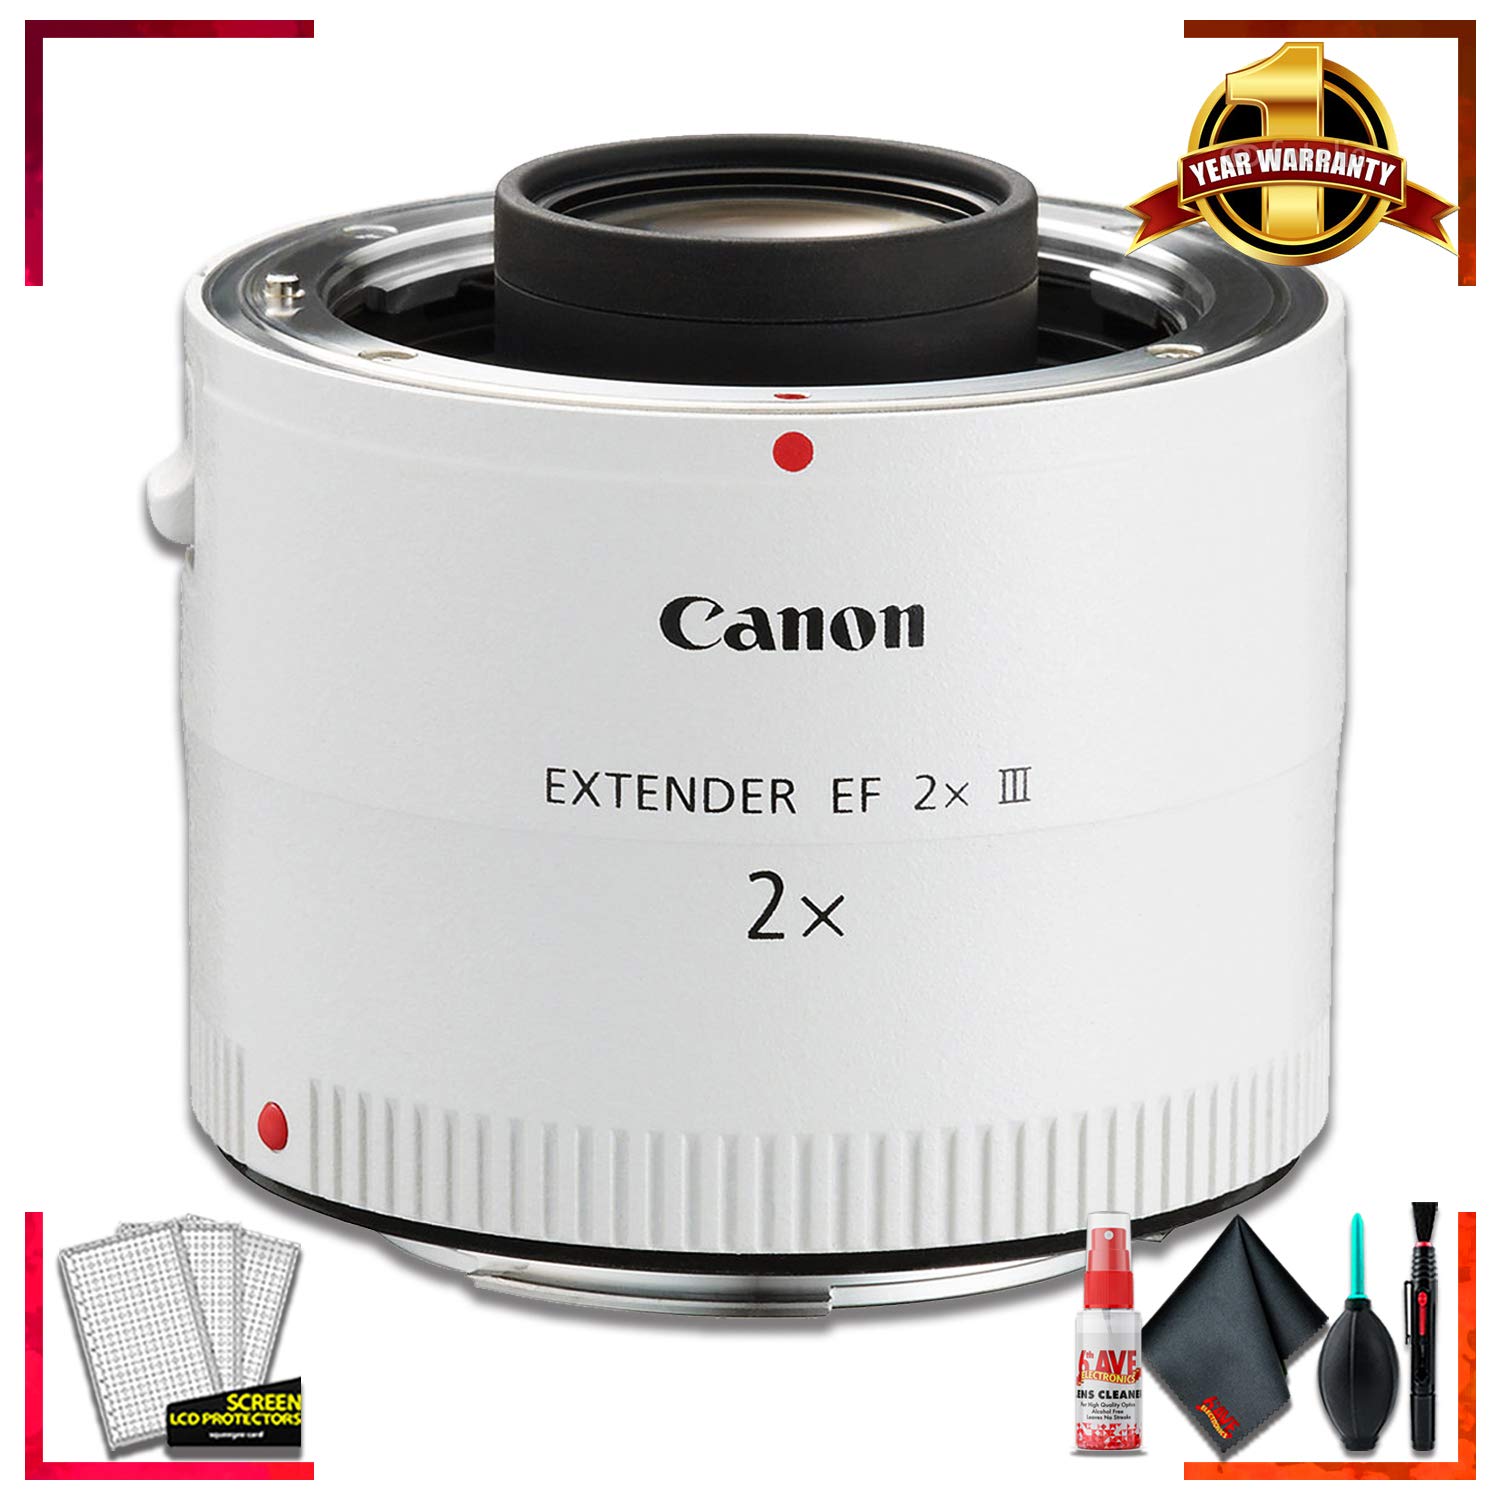 Canon Extender EF 2X III (Intl Model) + Cleaning Kit